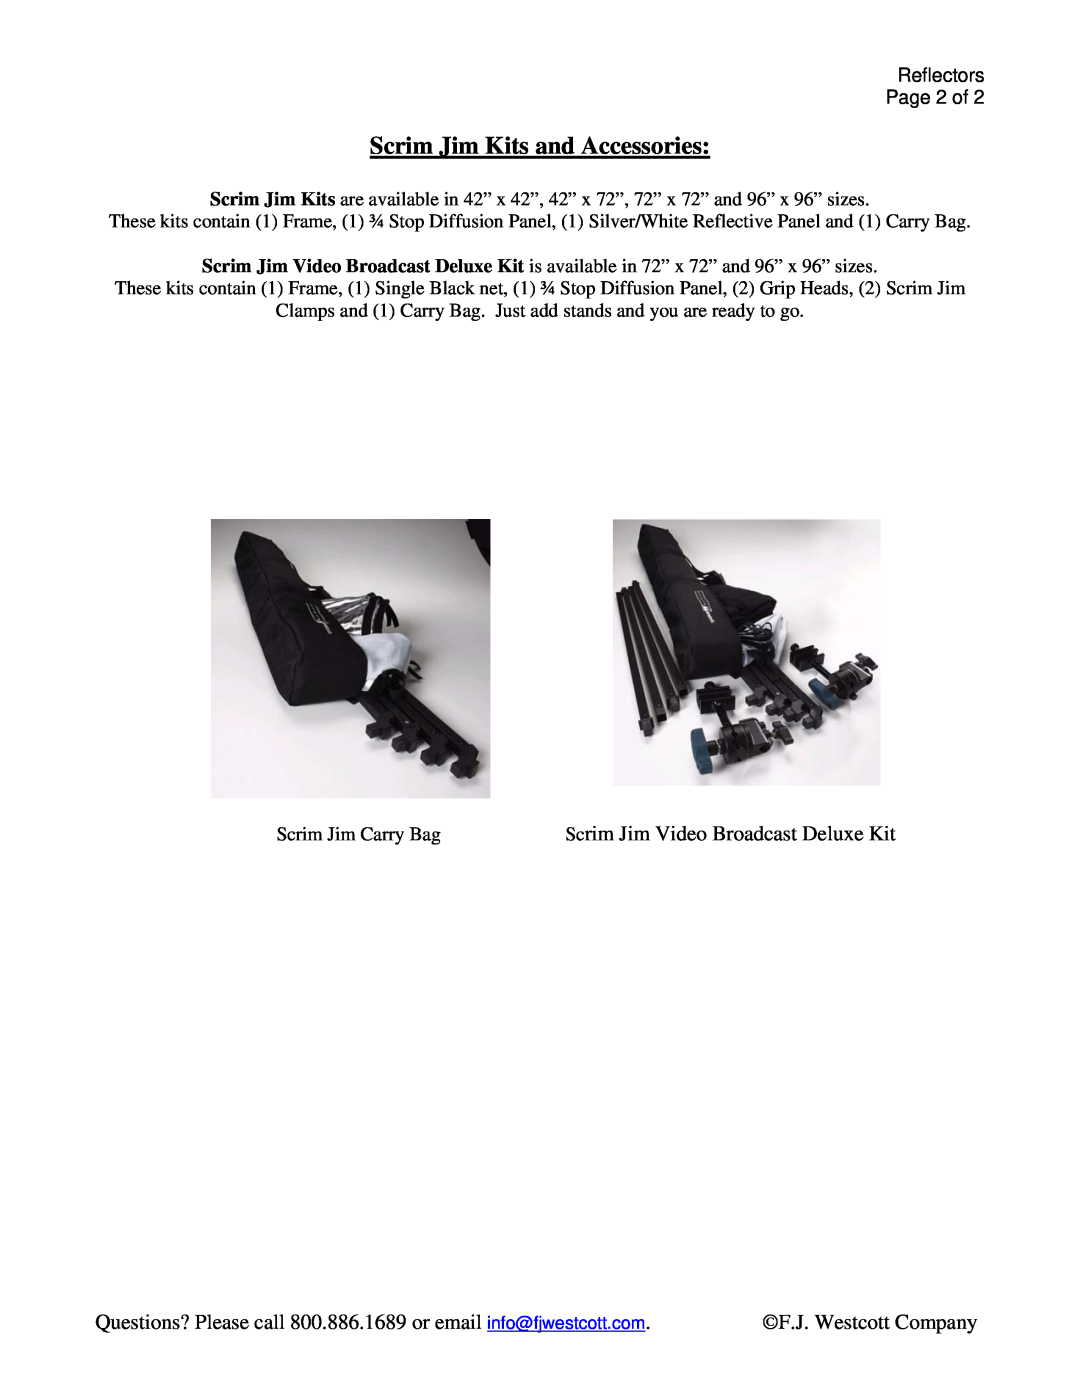 Westcott 1858 manual Scrim Jim Kits and Accessories, Reflectors 